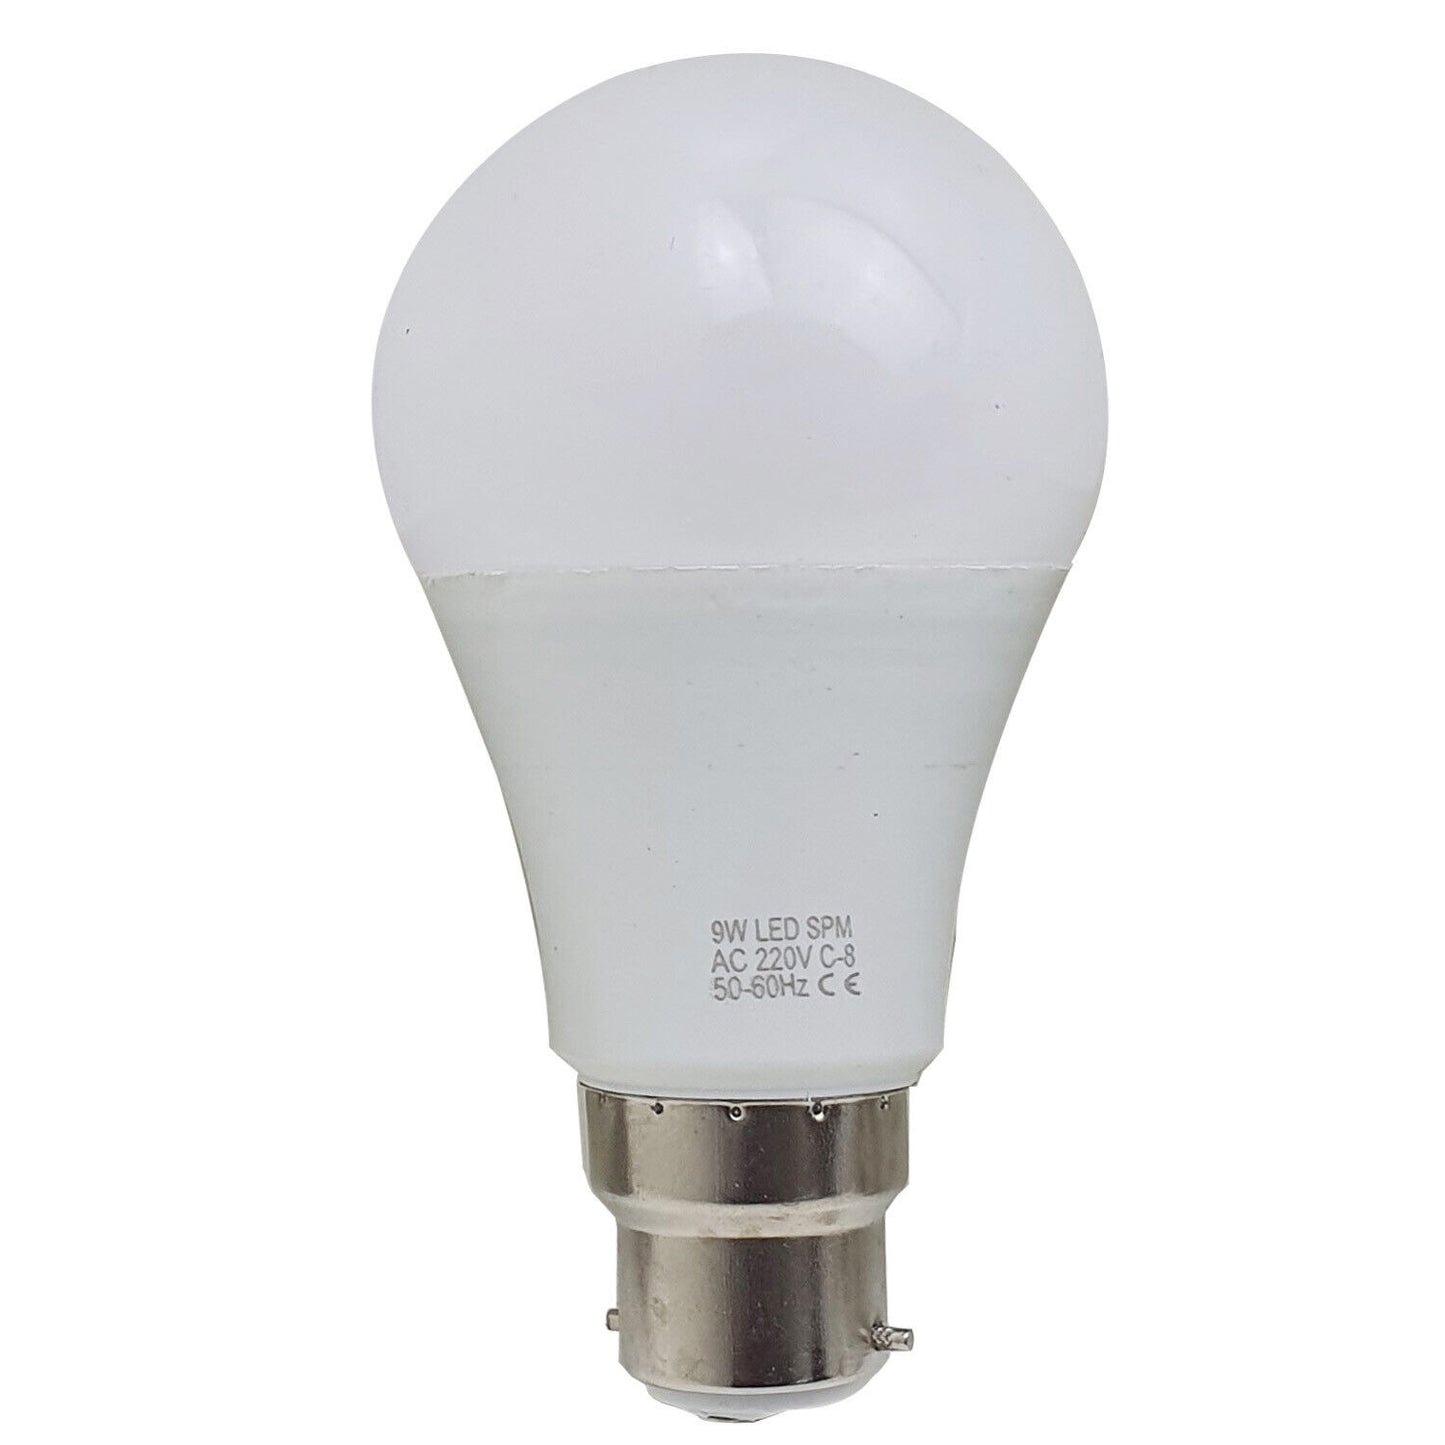 9W B22 Screw LED Light GLS bulbs, Energy Saving Edison Cool White 6000K non dimmable lights